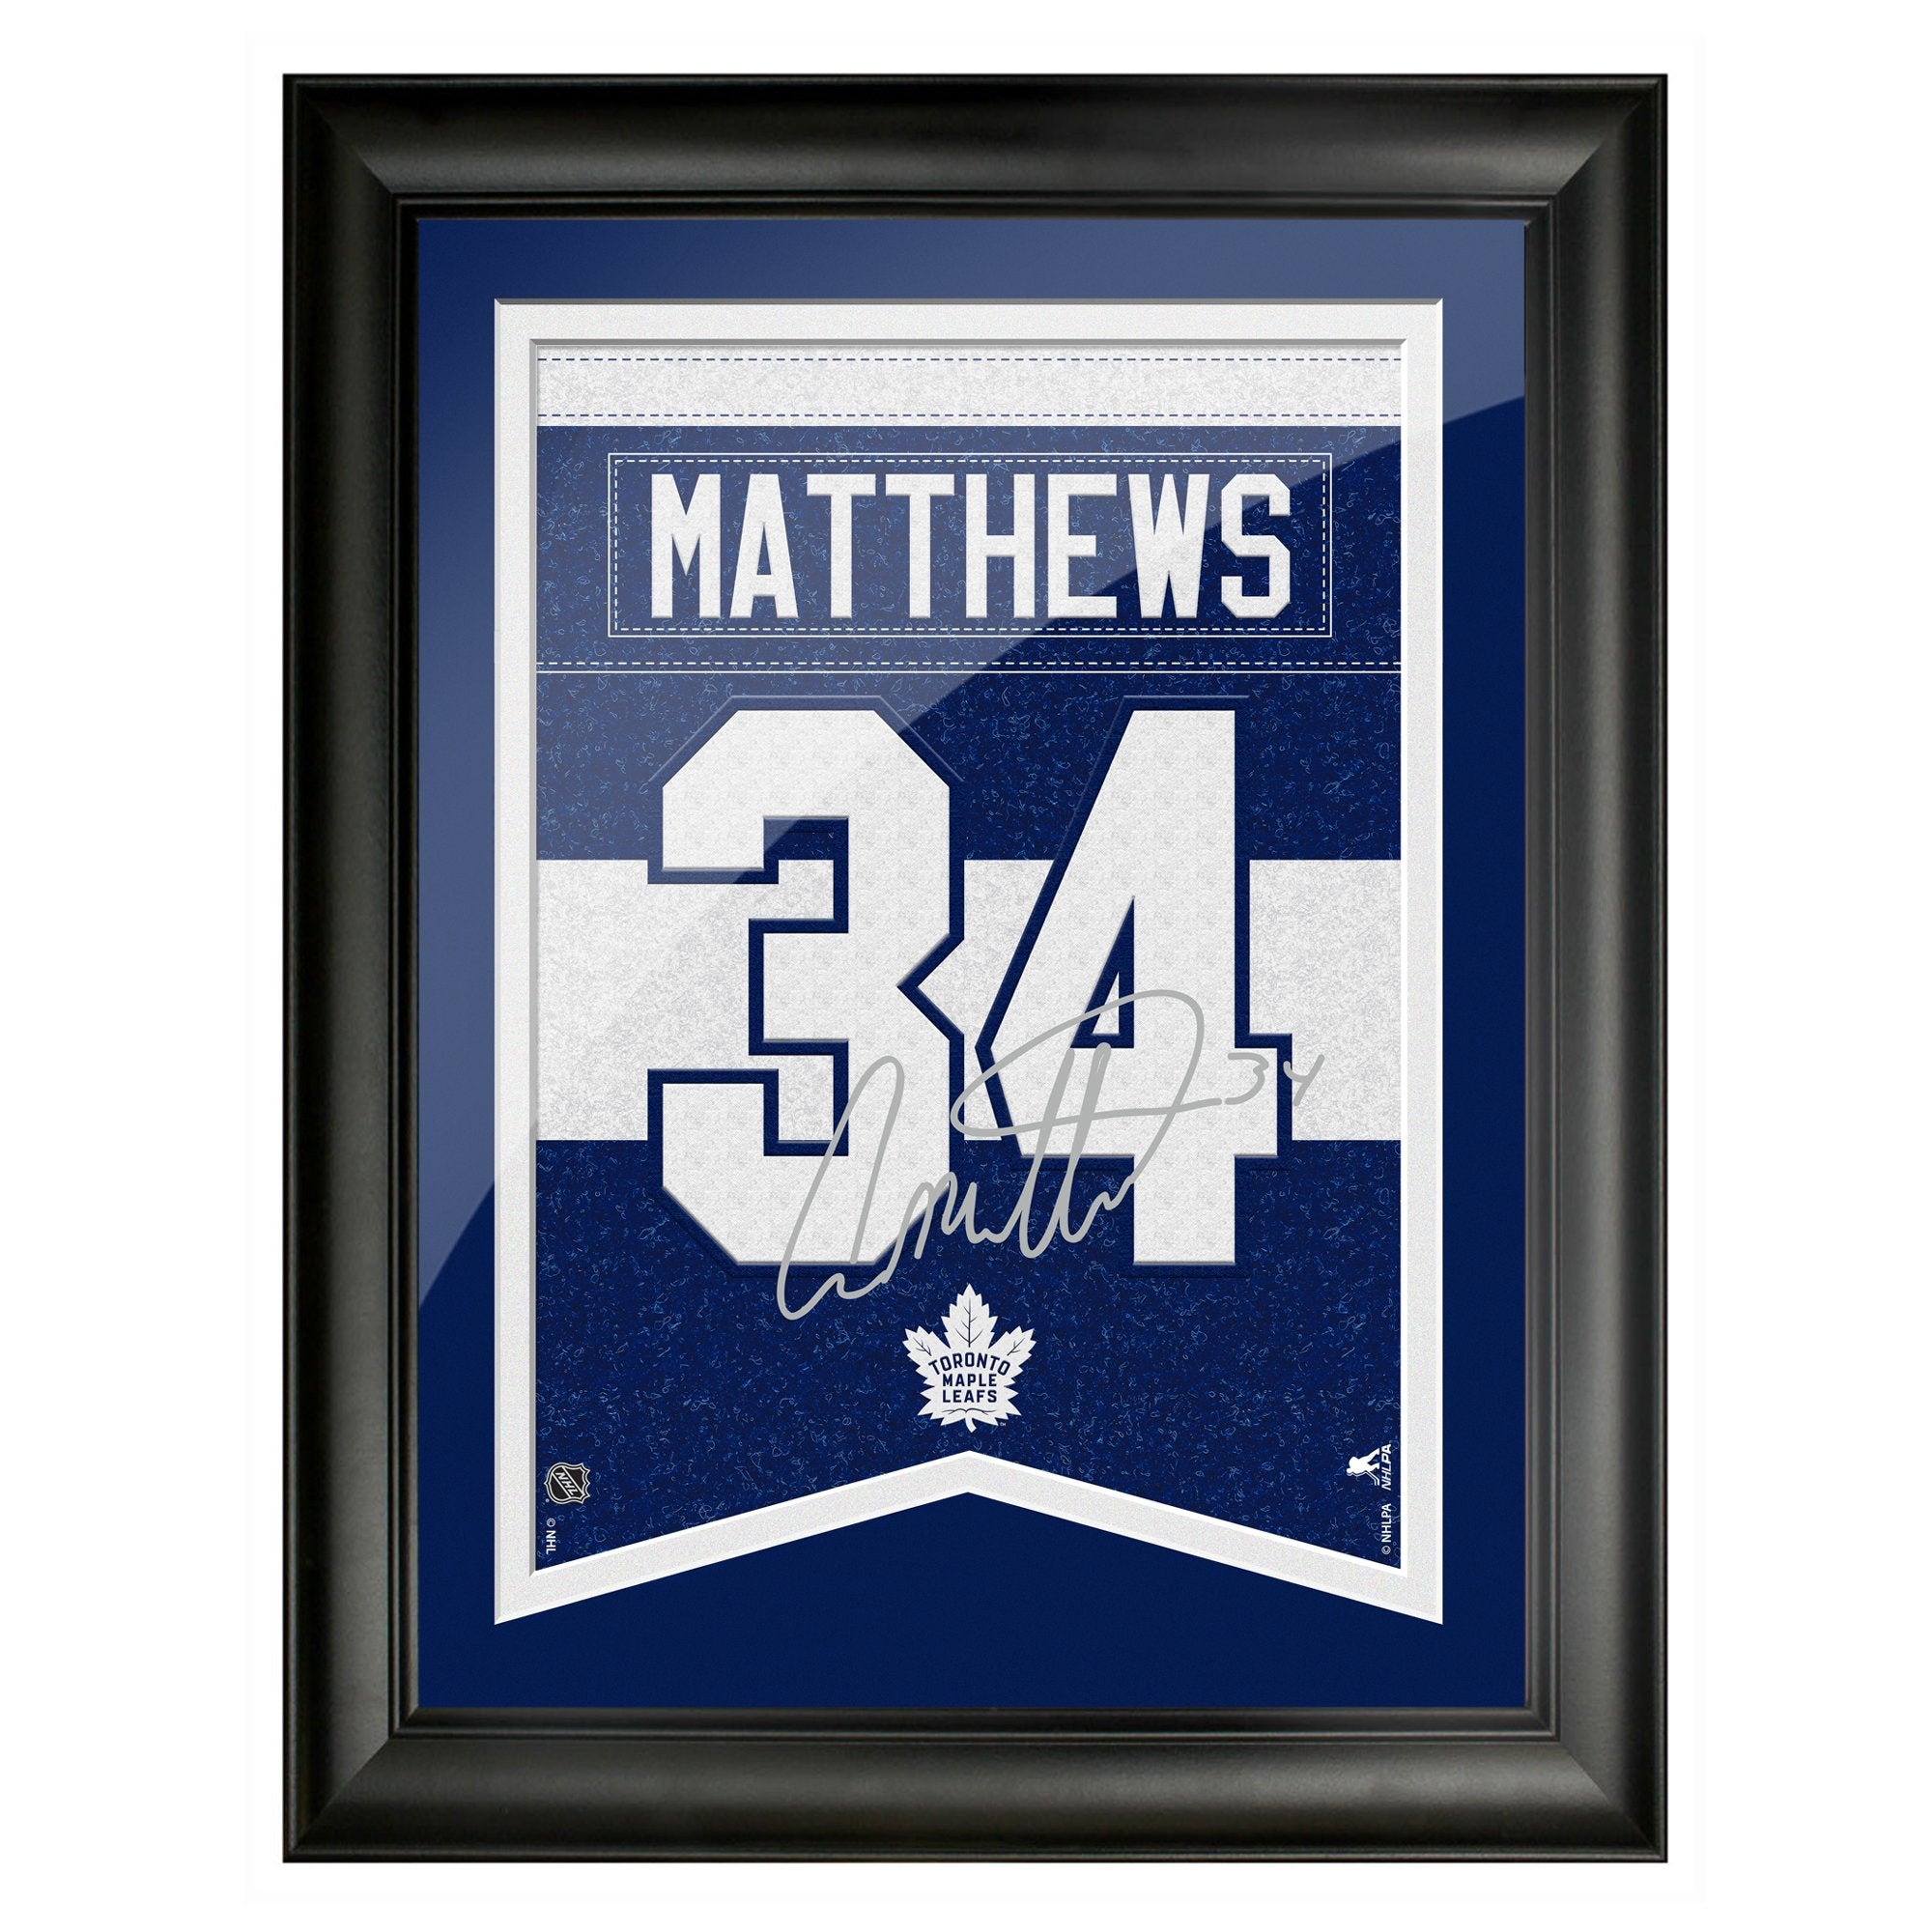 Auston Matthews Toronto Maple Leafs Framed Autographed Black